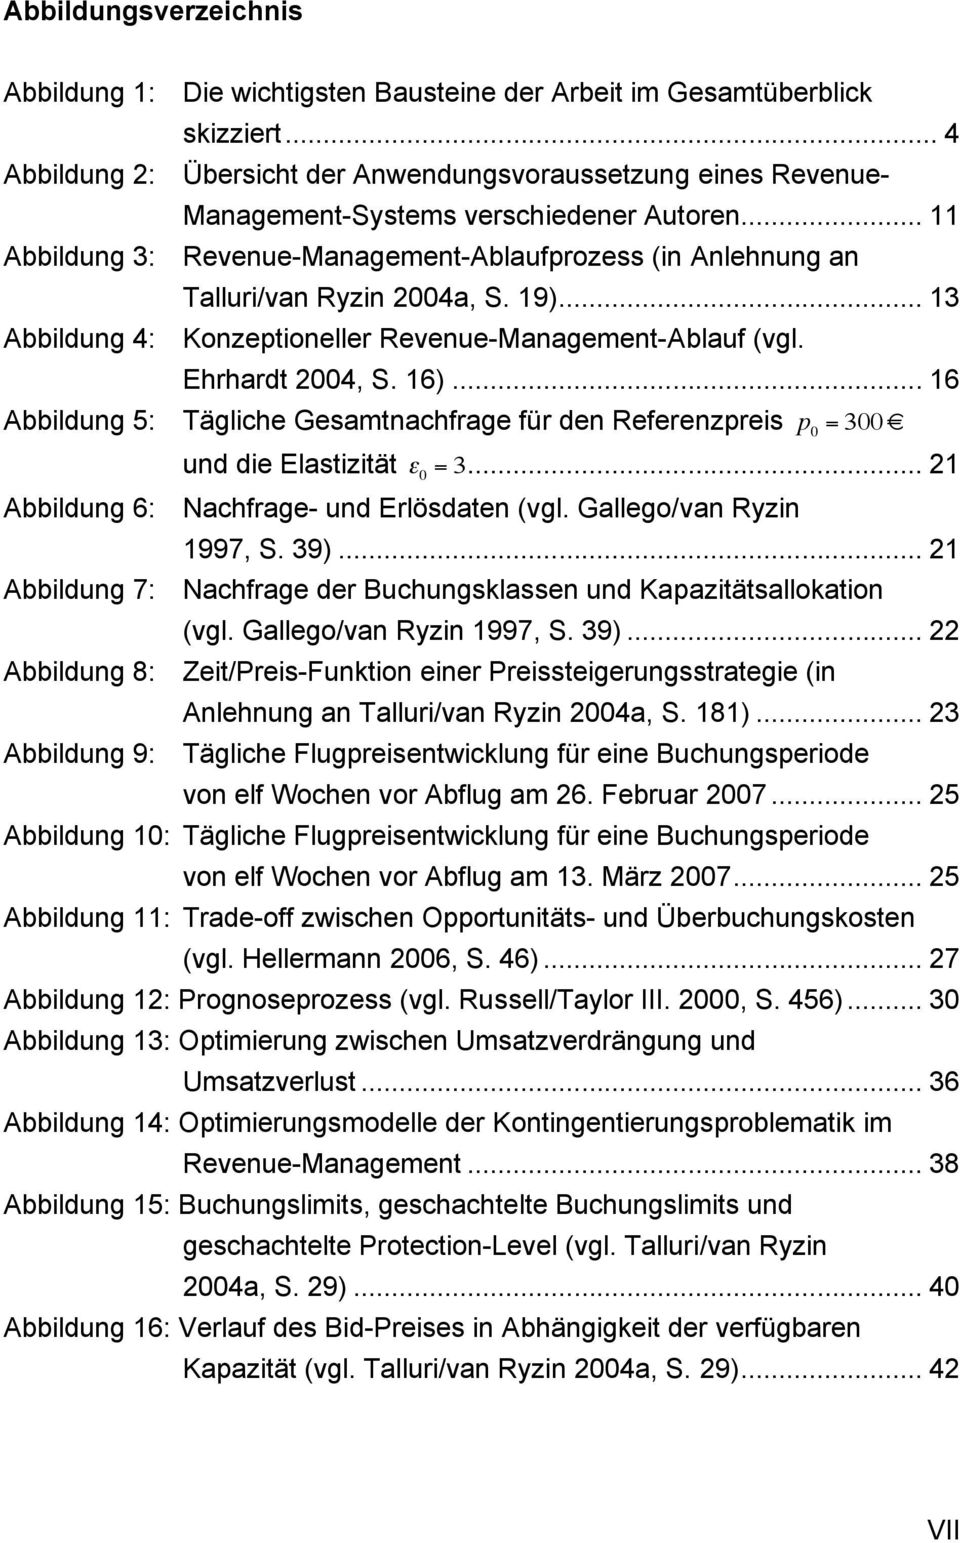 .. 11 Abbildung 3: Revenue-Management-Ablaufprozess (in Anlehnung an Talluri/van Ryzin 2004a, S. 19)... 13 Abbildung 4: Konzeptioneller Revenue-Management-Ablauf (vgl. Ehrhardt 2004, S. 16).